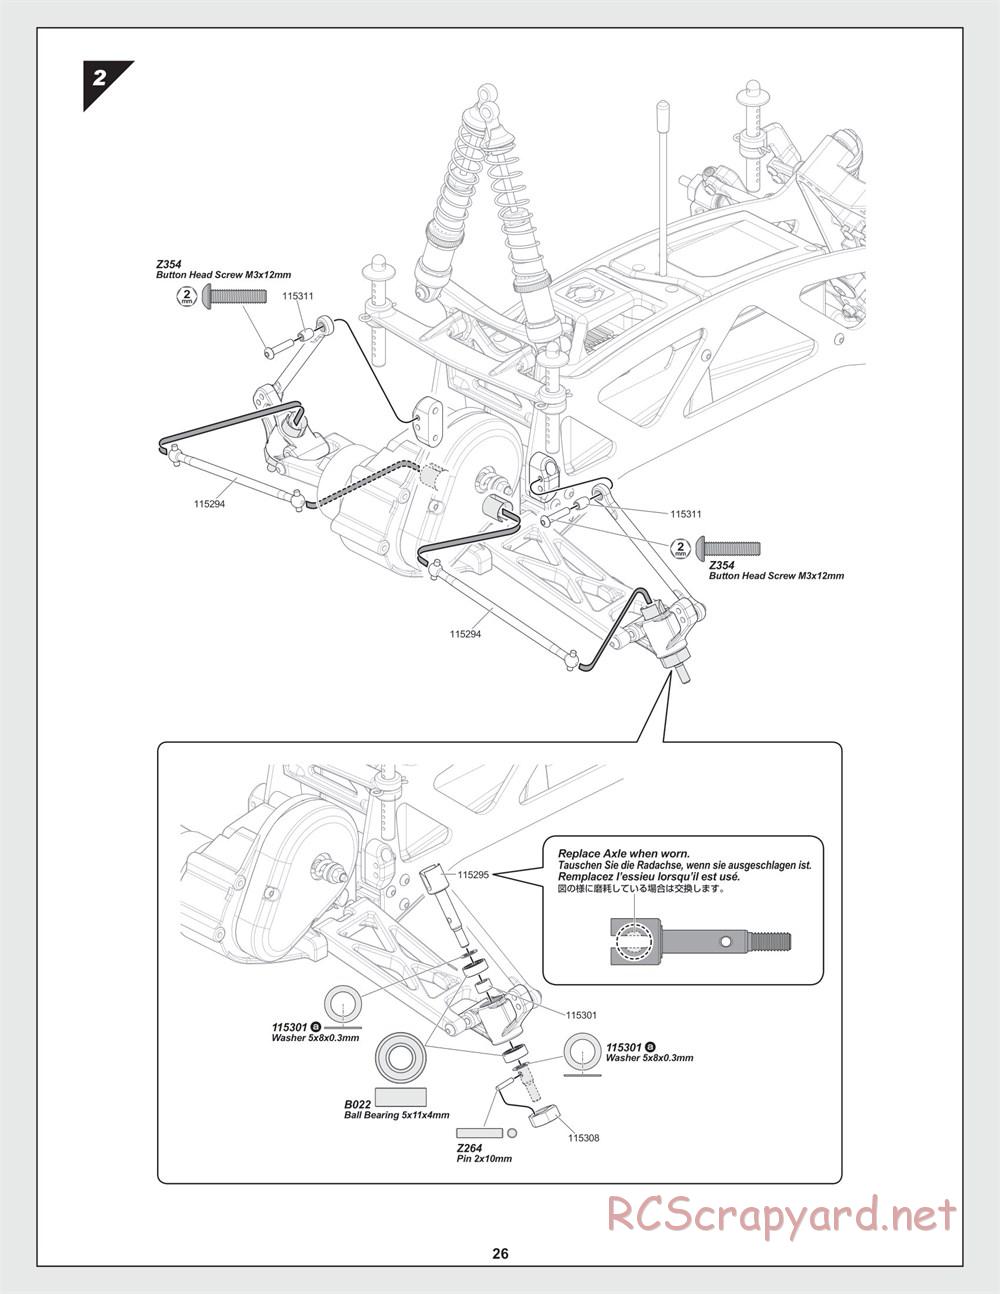 HPI - Jumpshot MT - Manual - Page 26